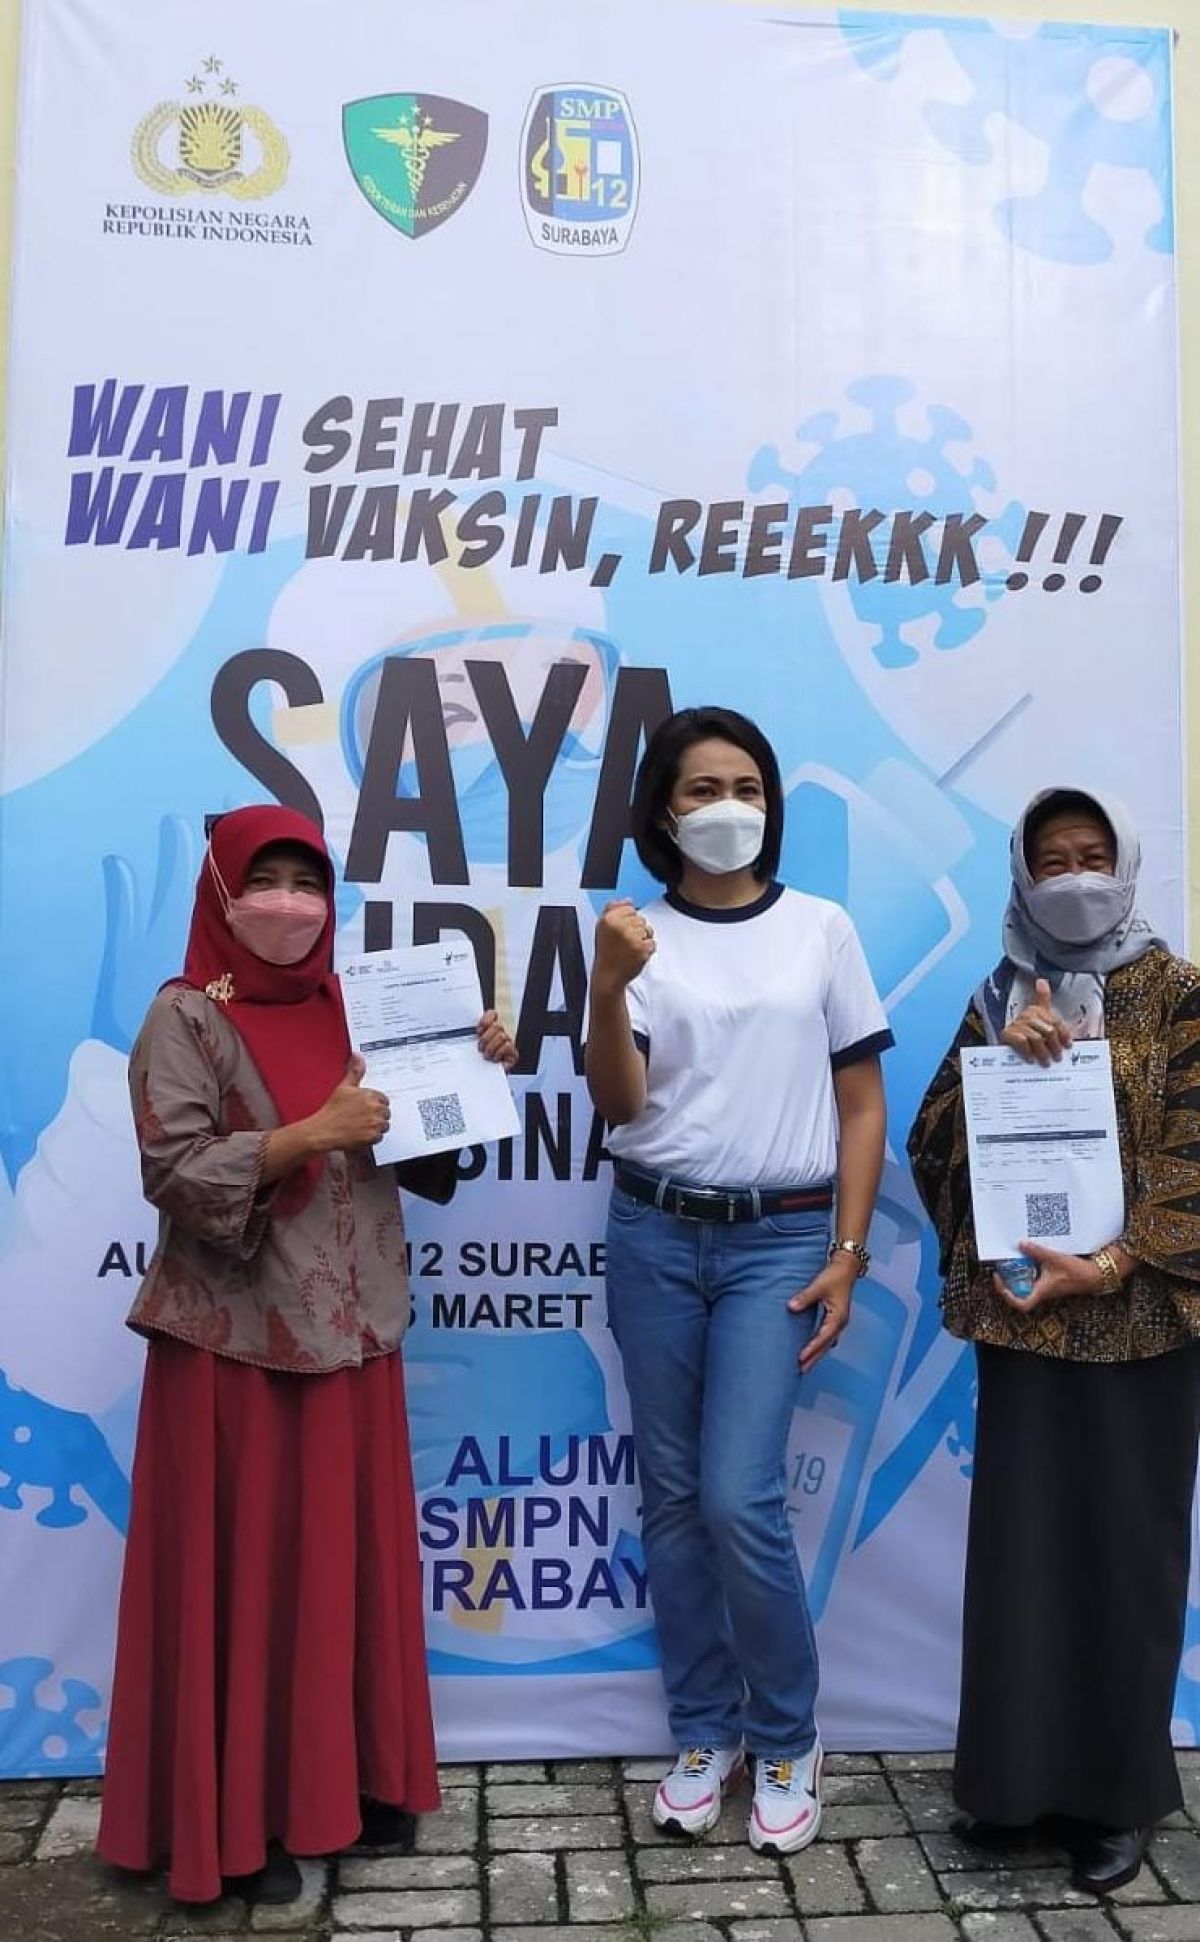 Dini Herawati selaku koordinator acara Vaksin Massal SMPN 12 Surabaya bersama Kasek dan Wakasek SMPN12 Surabaya setelah menerima sertifikat vaksin booster.